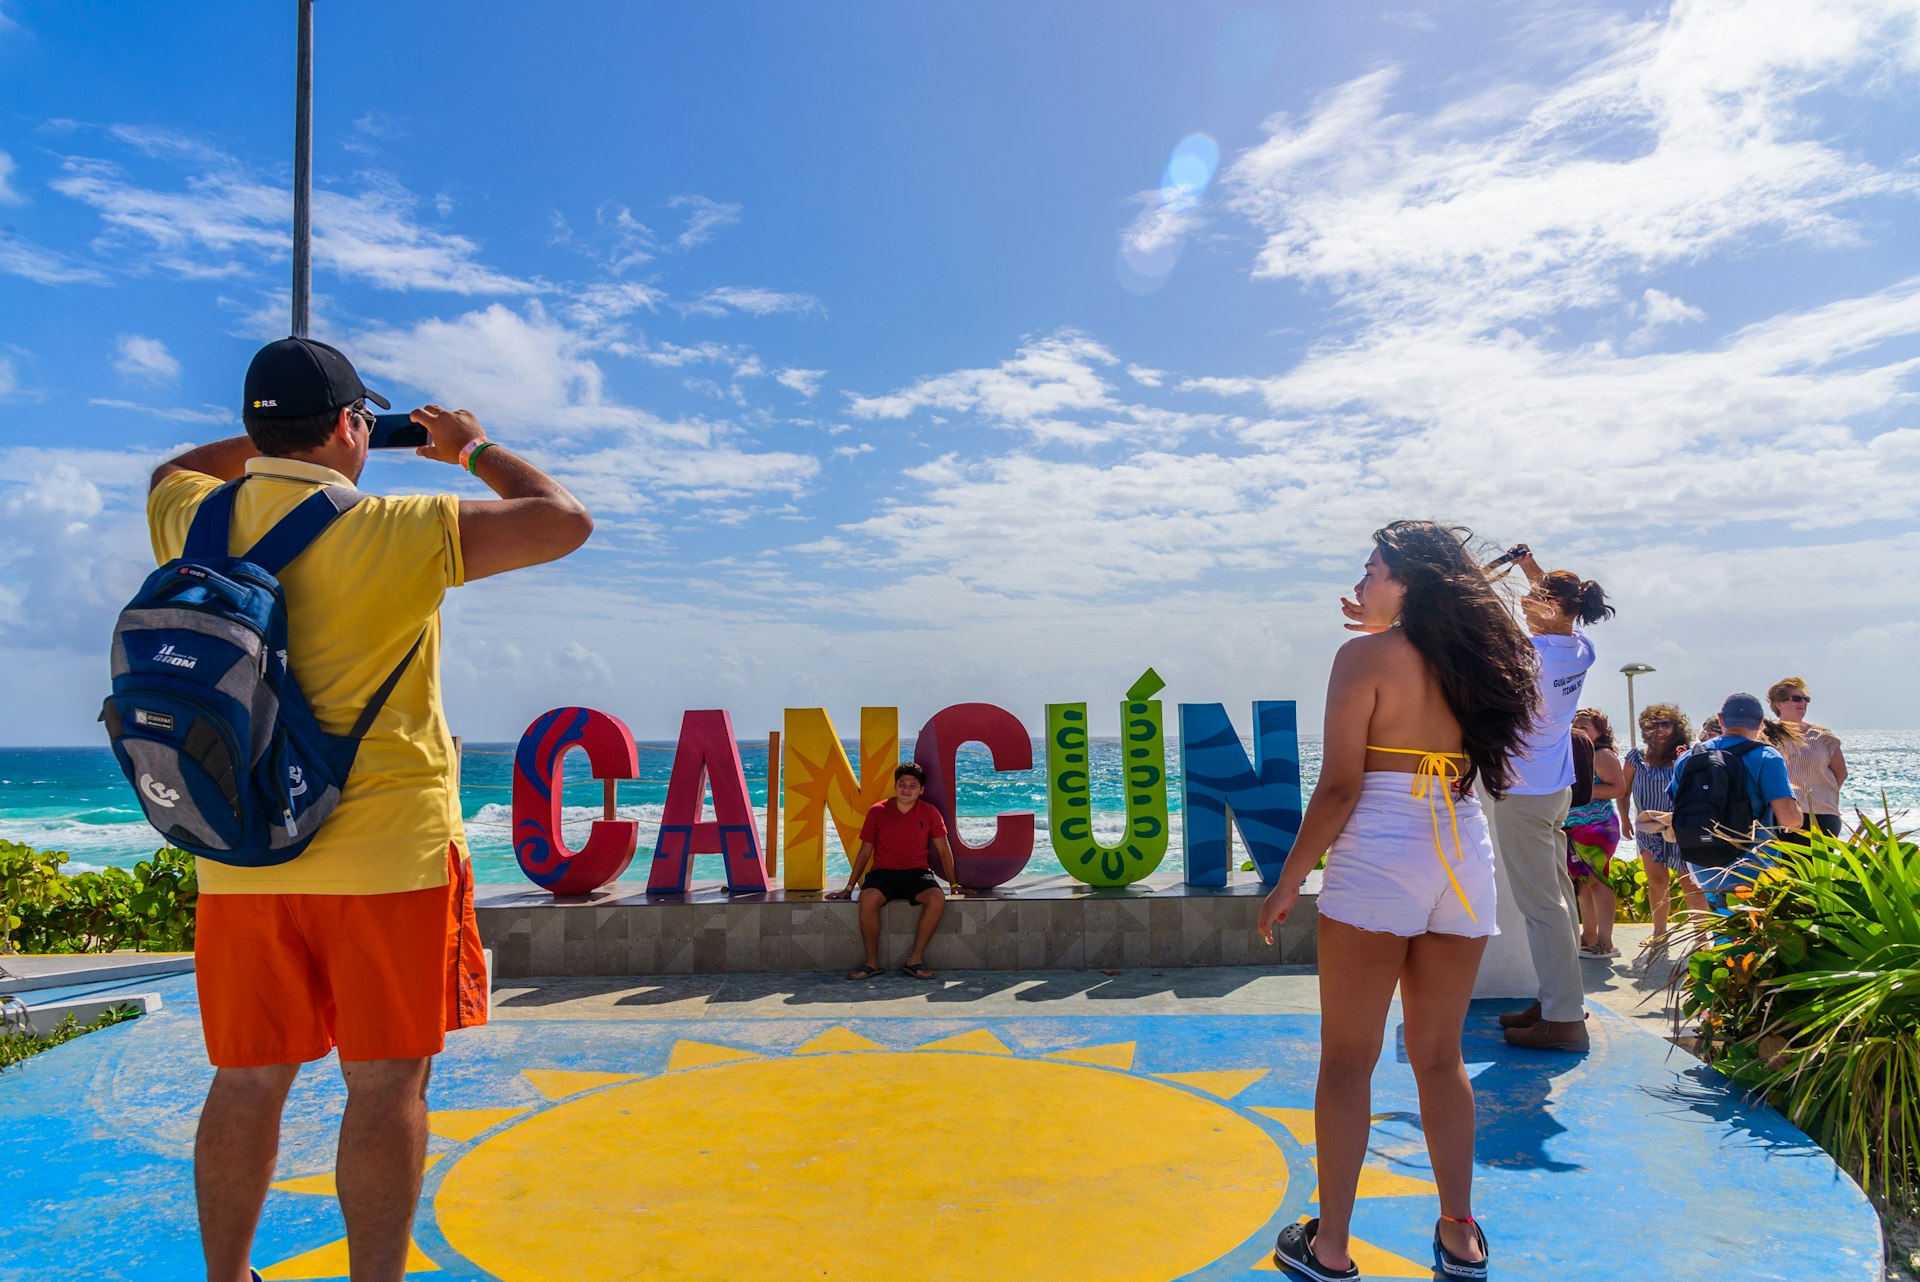 Cancun sign at Playa Delfines